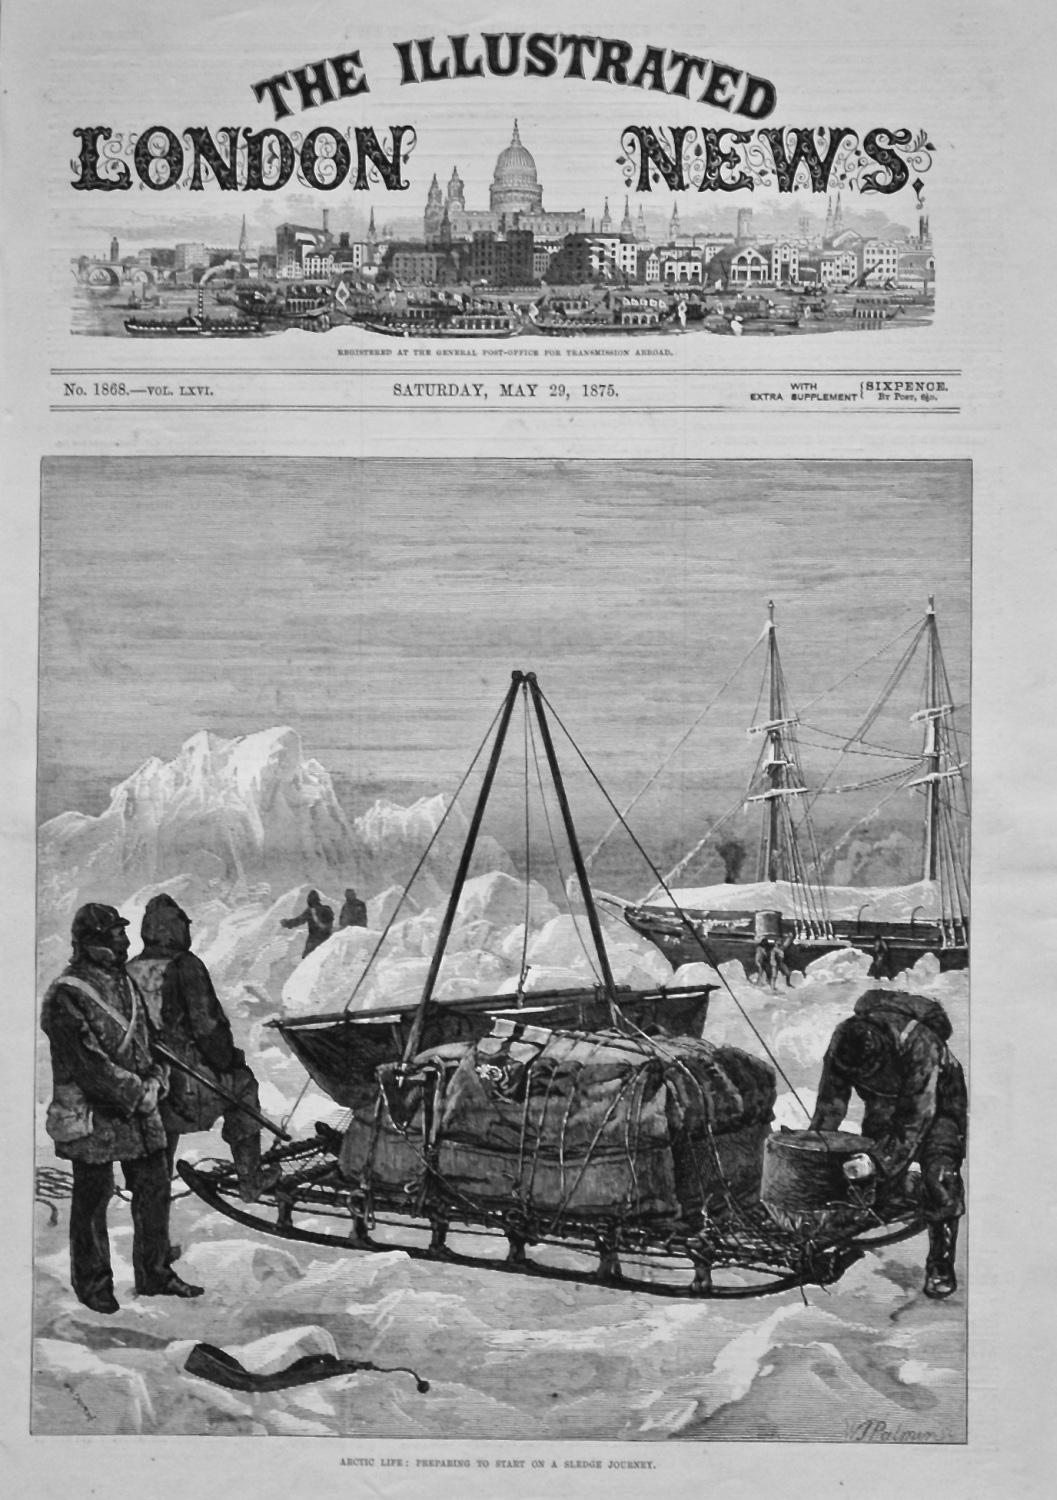 Arctic Life : Preparing to Start a Sledge Journey. 1875.